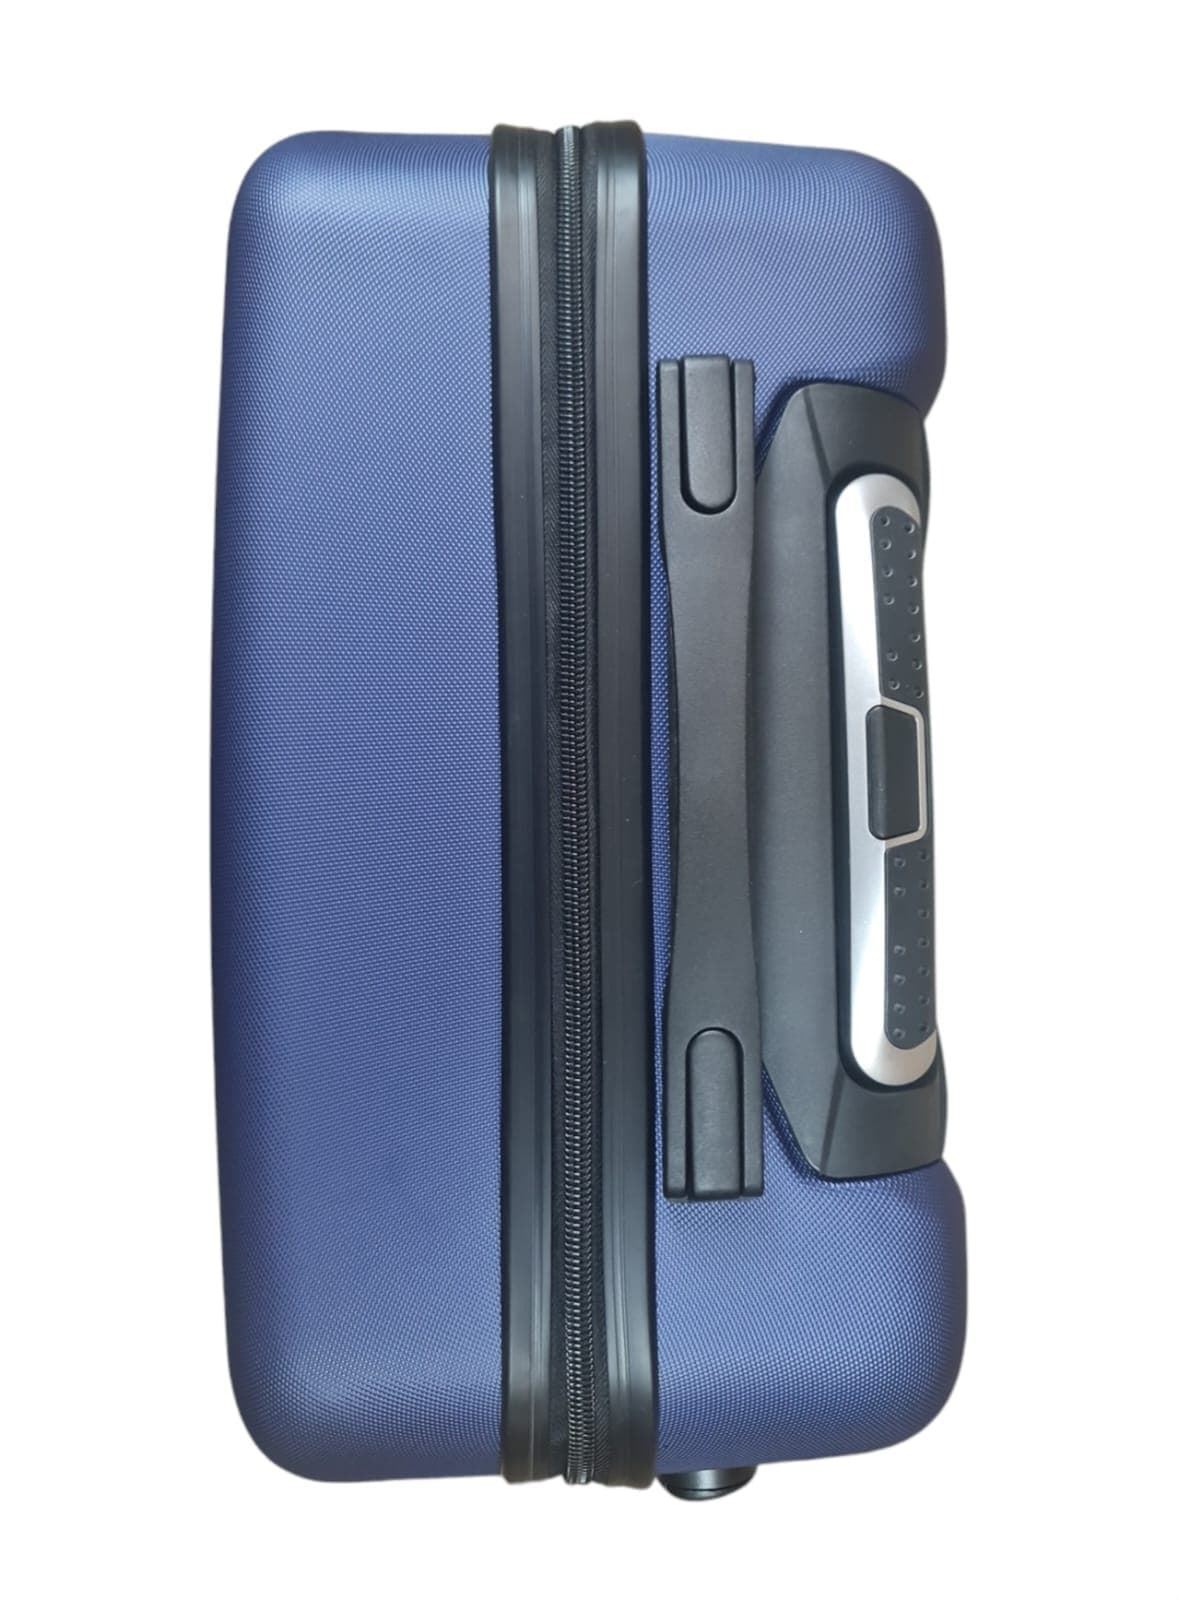 Maleta Rigida Barata Tamaño cabina Quality Ligera Material ABS Medidas 55x40x20 cms color Azul Marino - Imagen 9